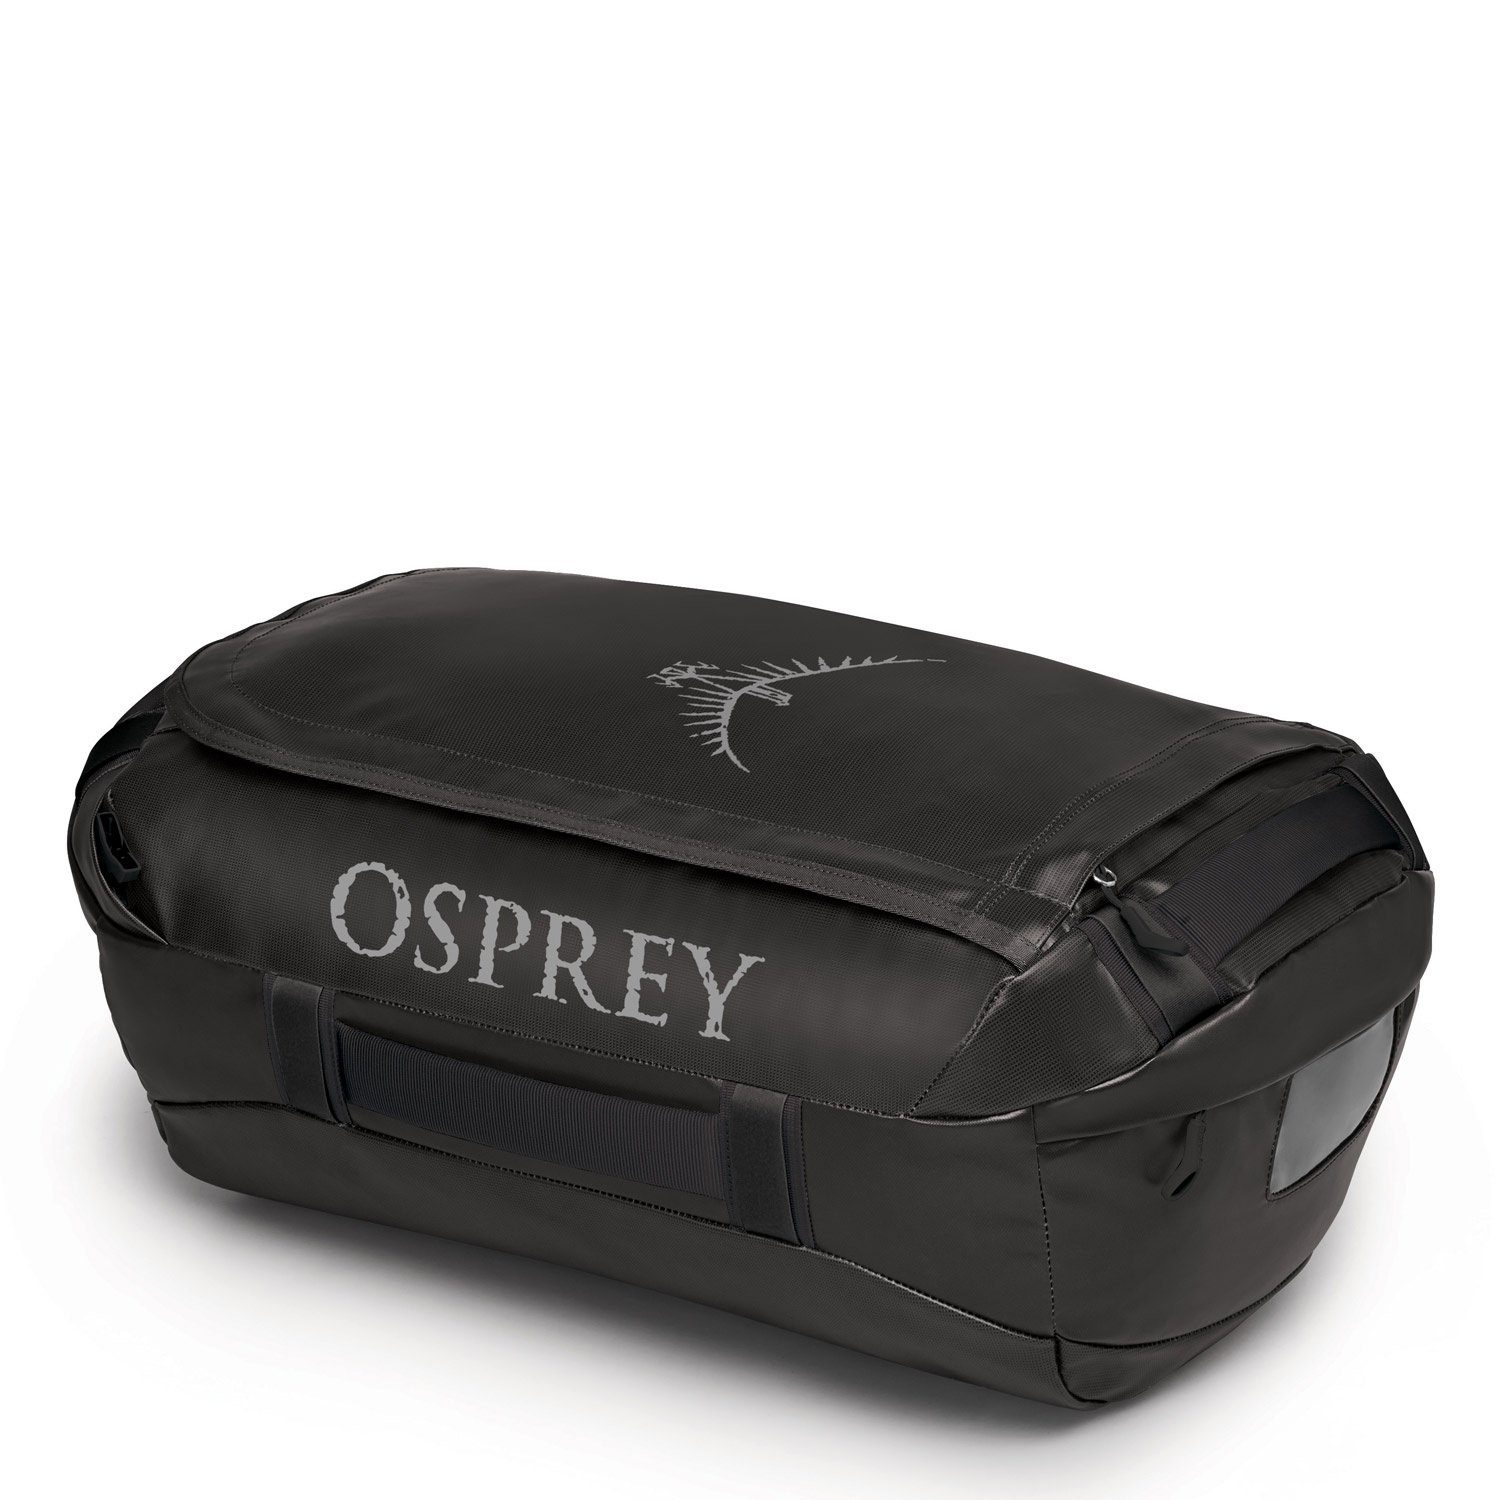 Stück) Osprey 40 (Stück, OSPREY Rucksack Transporter Reisetasche/Rucksack Black